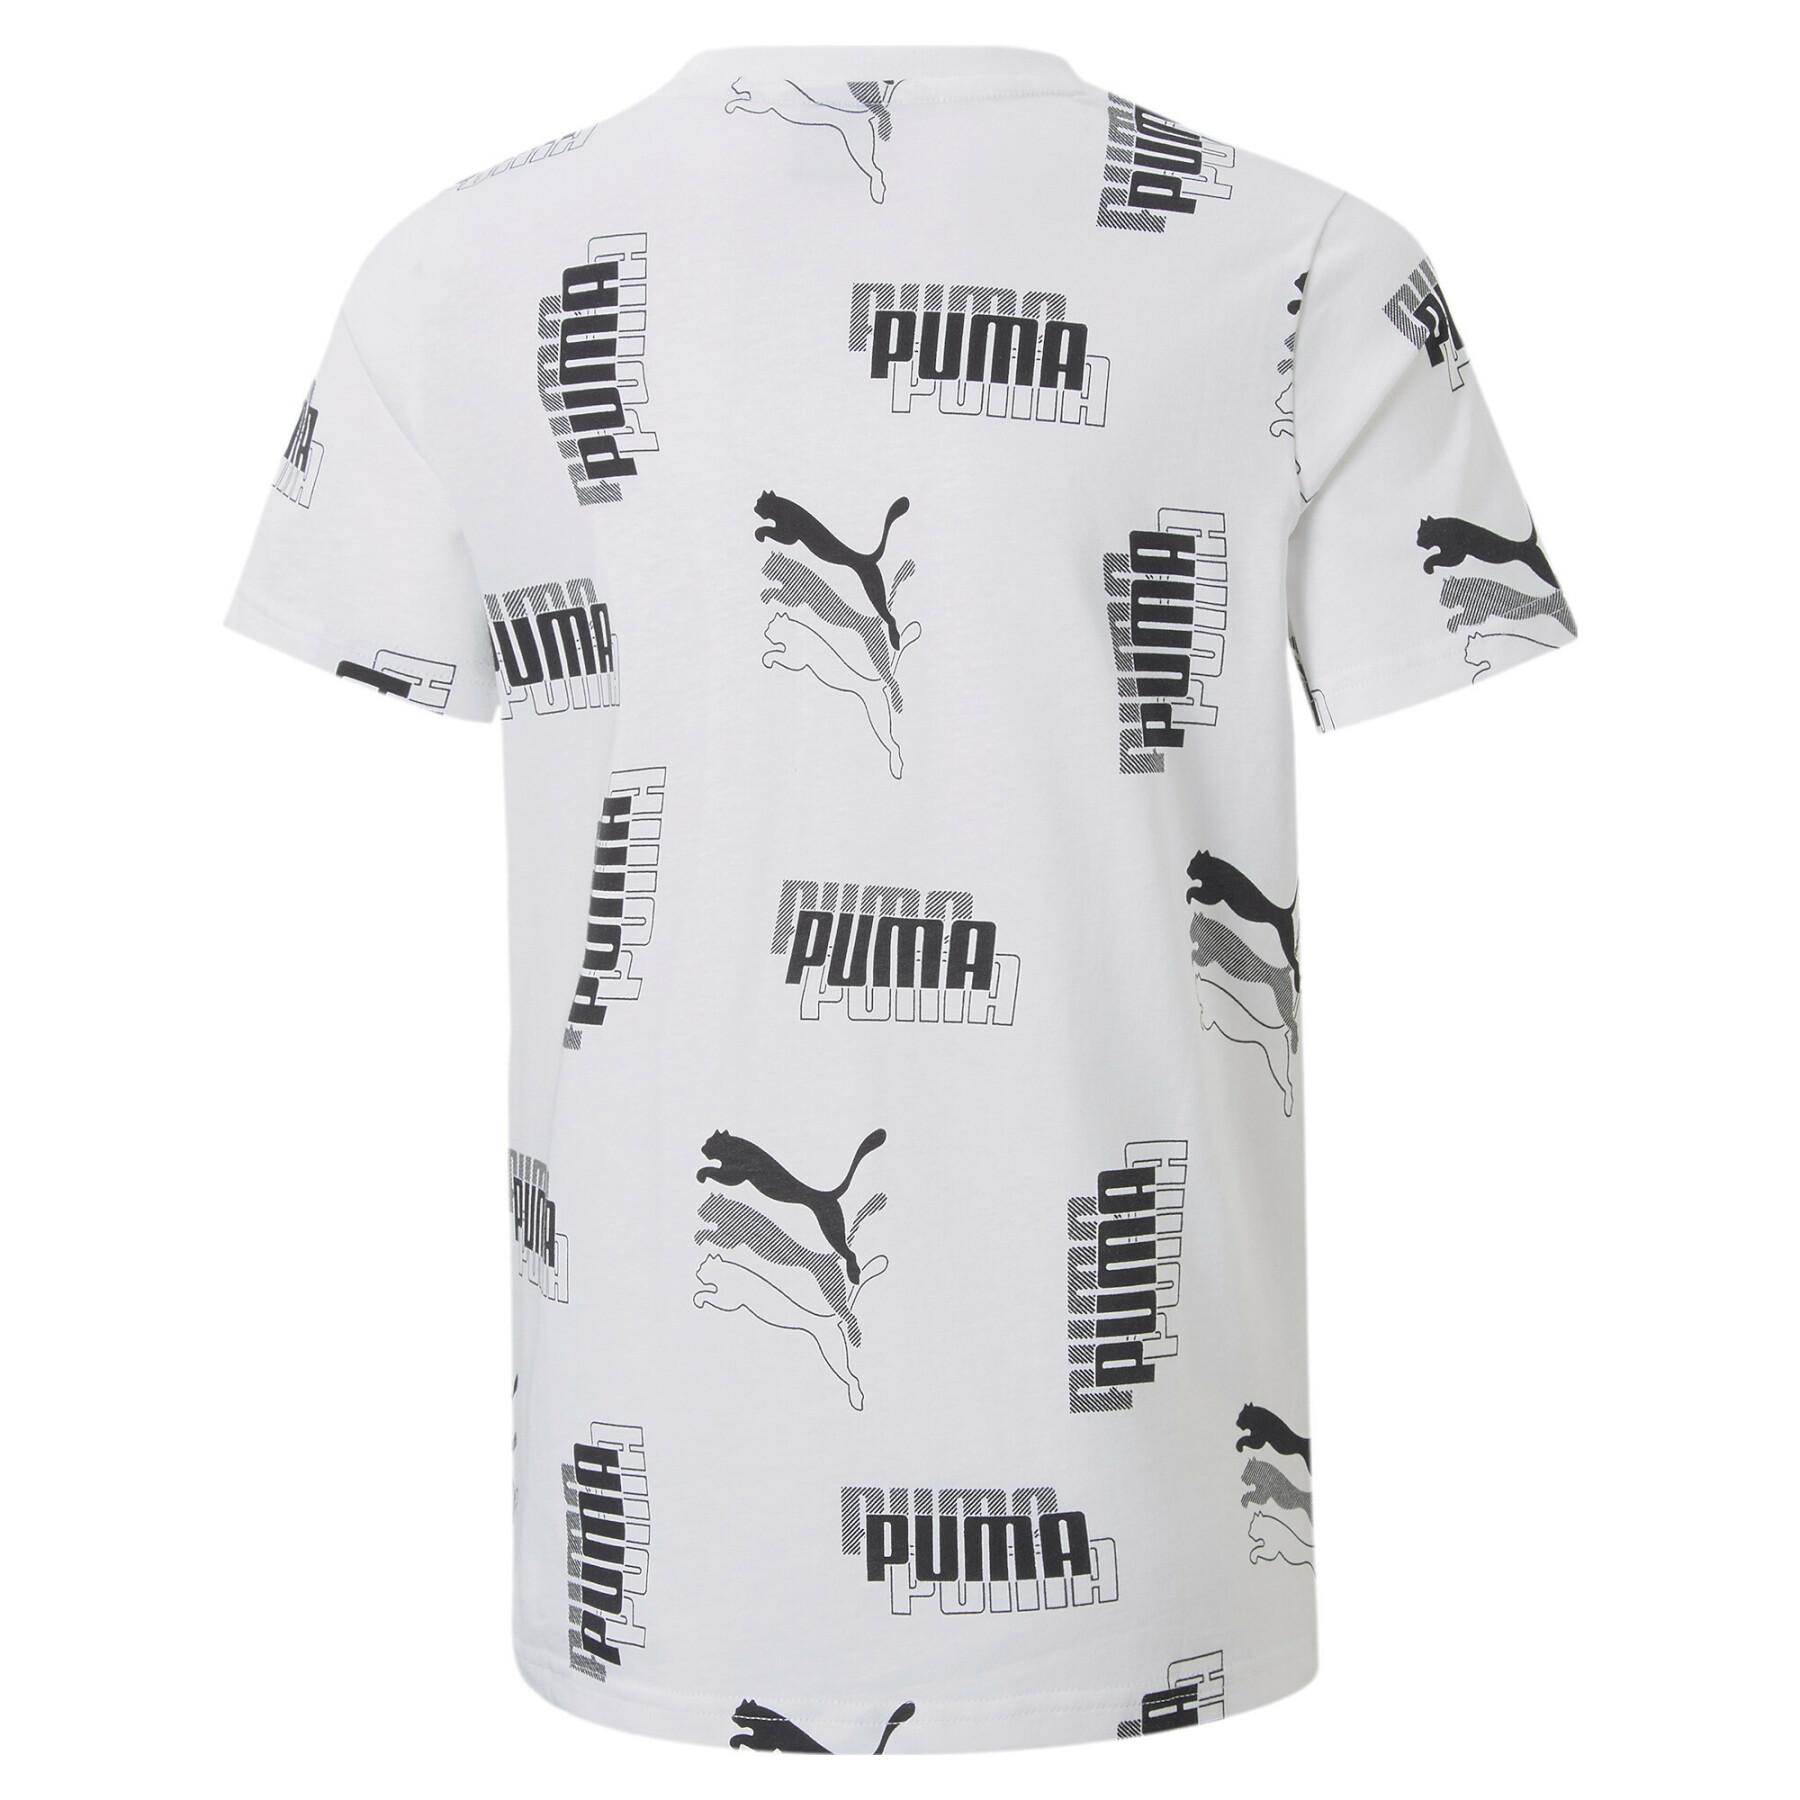 Kinder-T-shirt Puma Power AOP